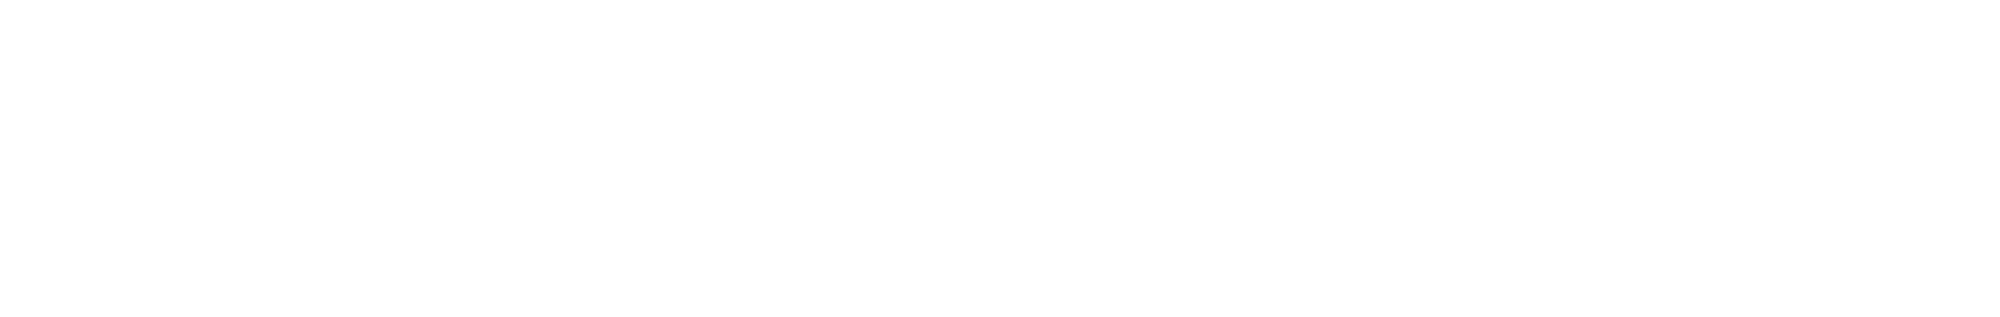 Tarnkappe.info Logo